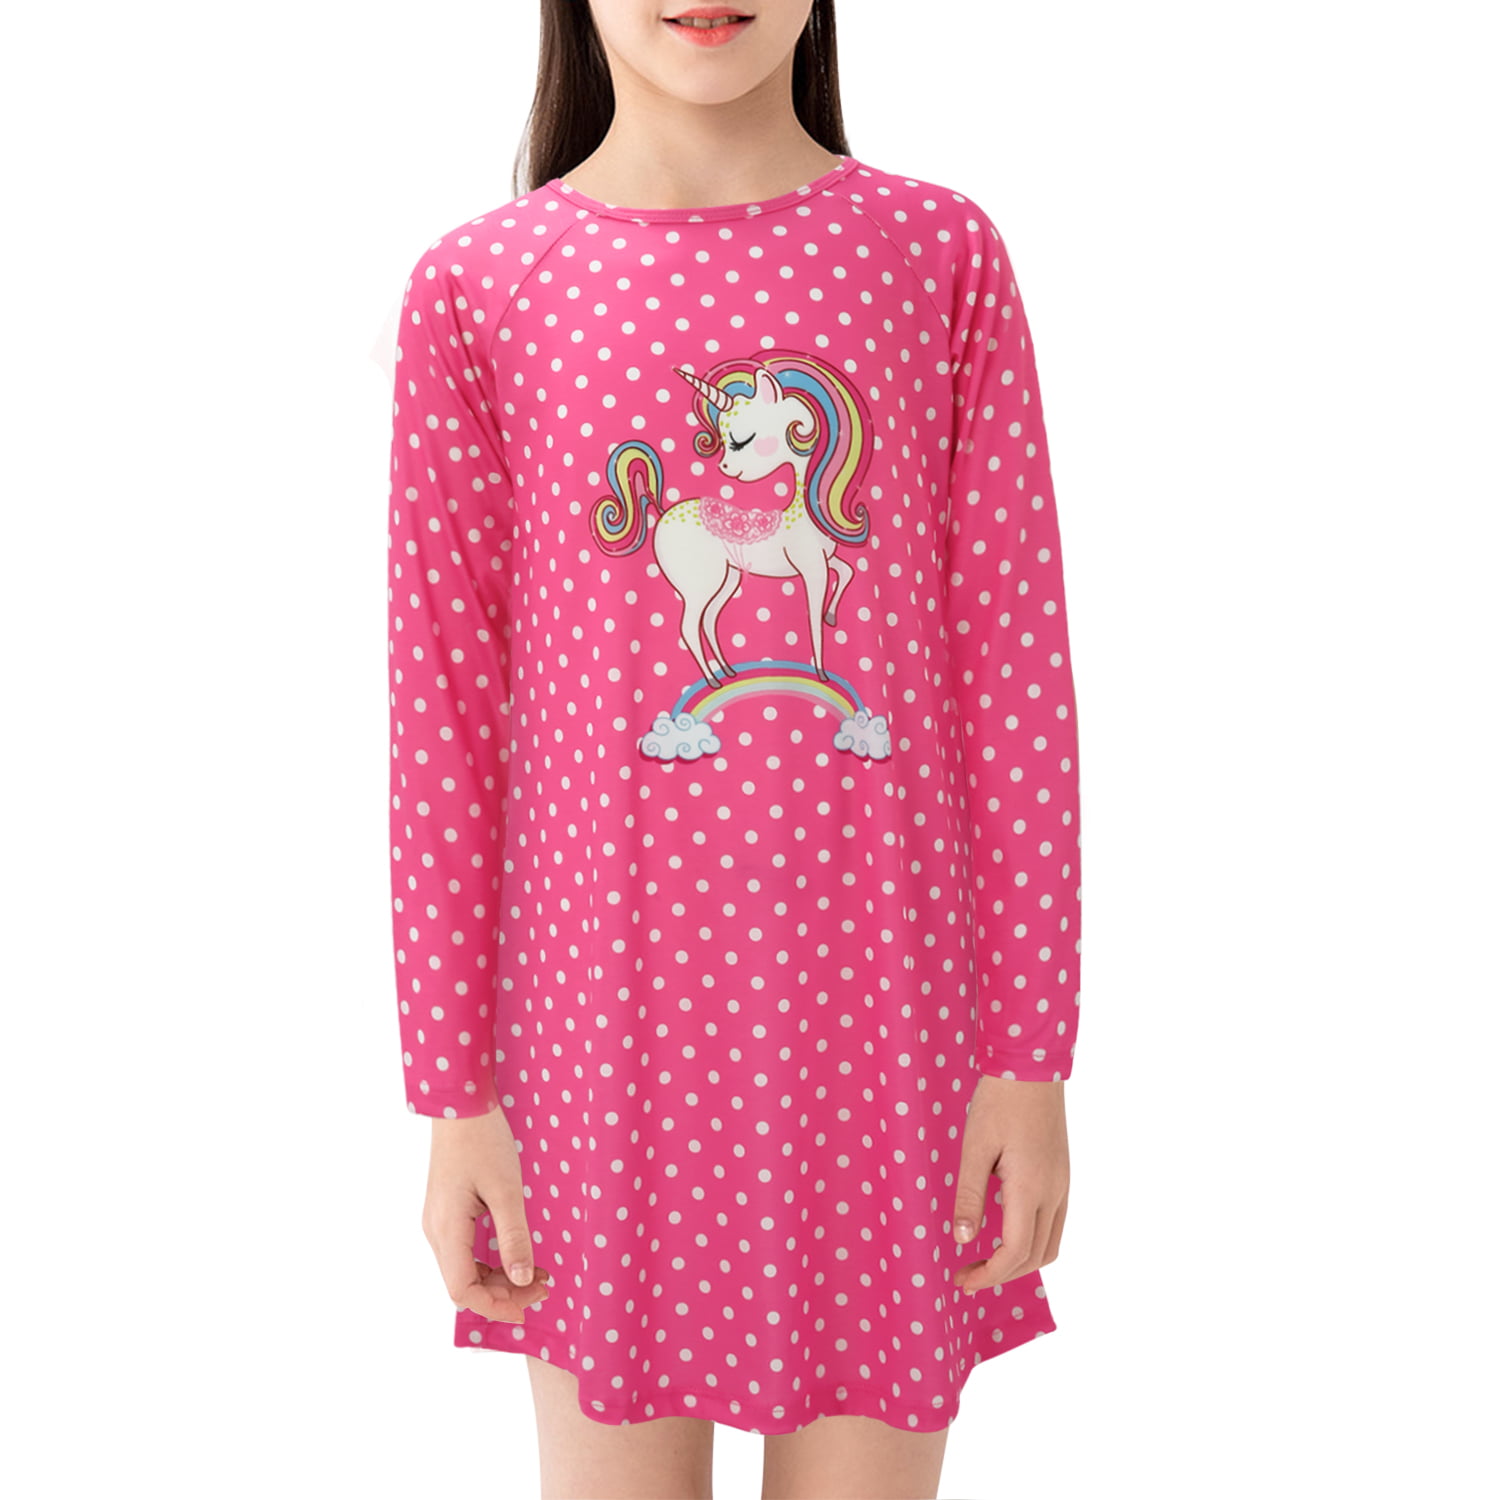 New Unicorn nightgown girls long sleeve night gown pajamas girl sizes 